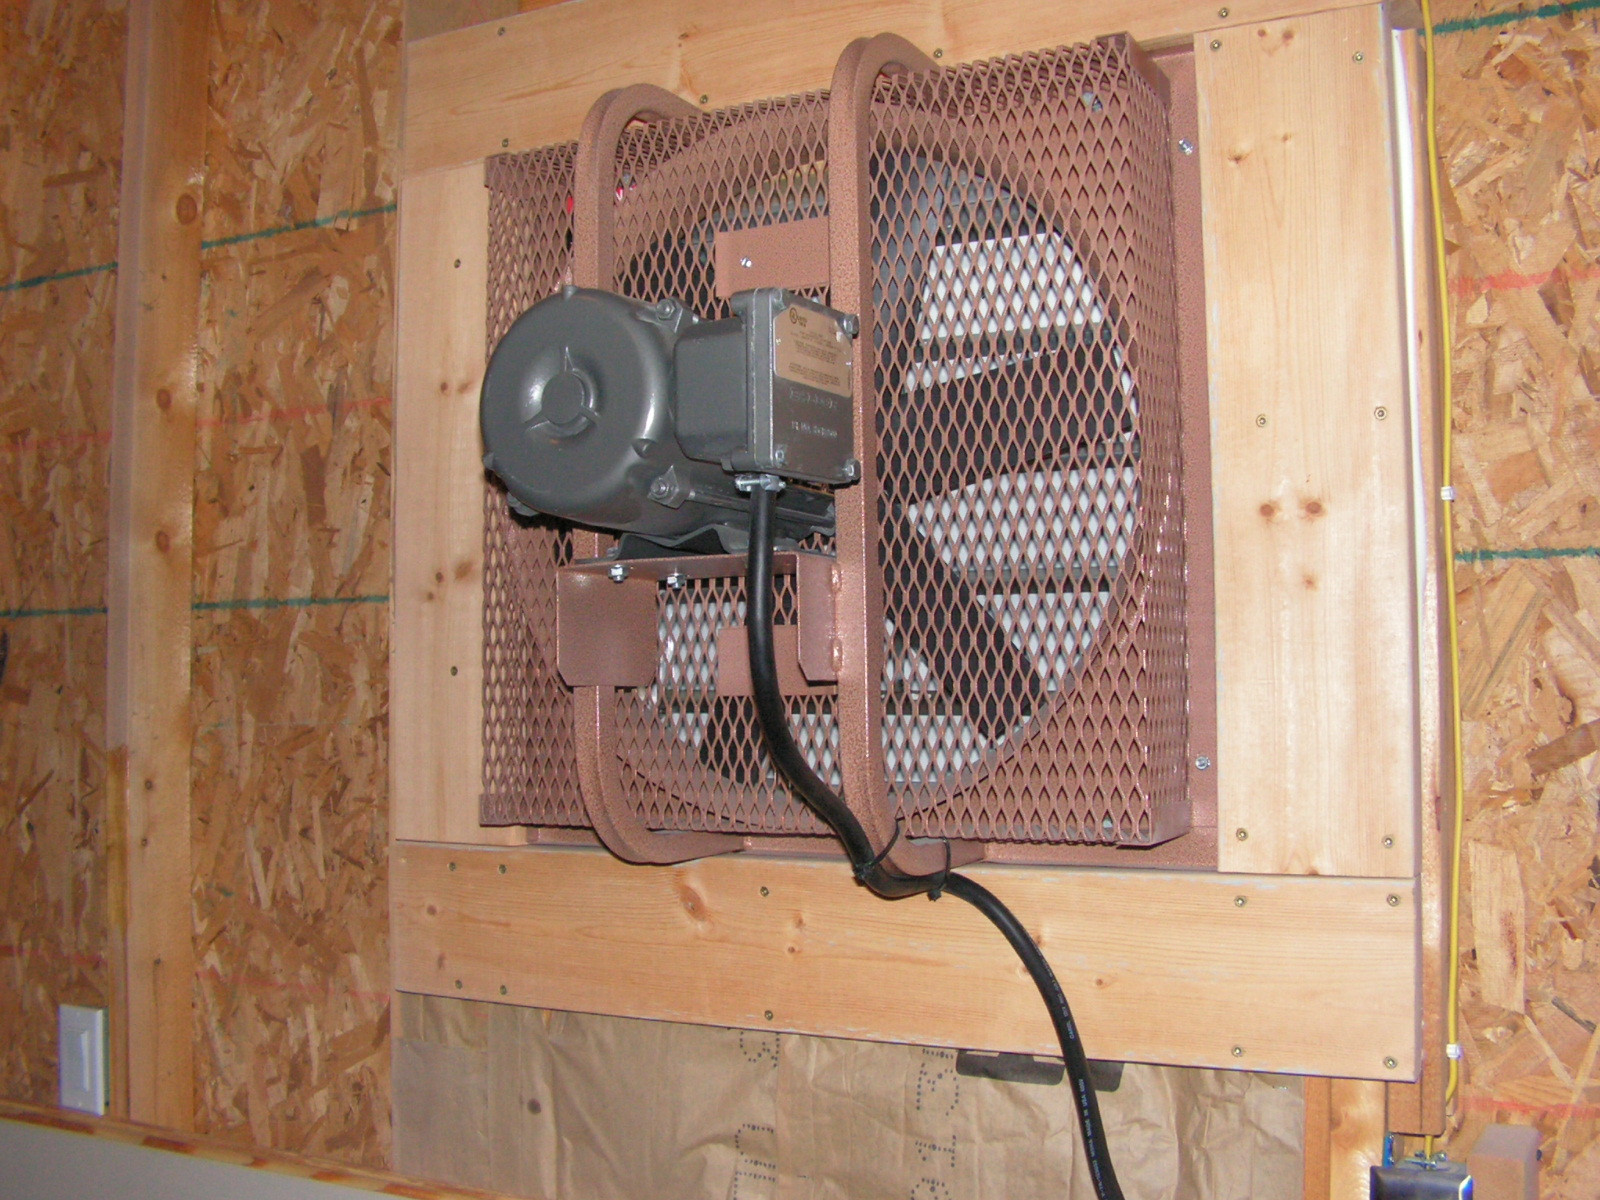 Best ideas about Garage Ventilation Ideas
. Save or Pin Garage Exhaust Fan Ideas Now.